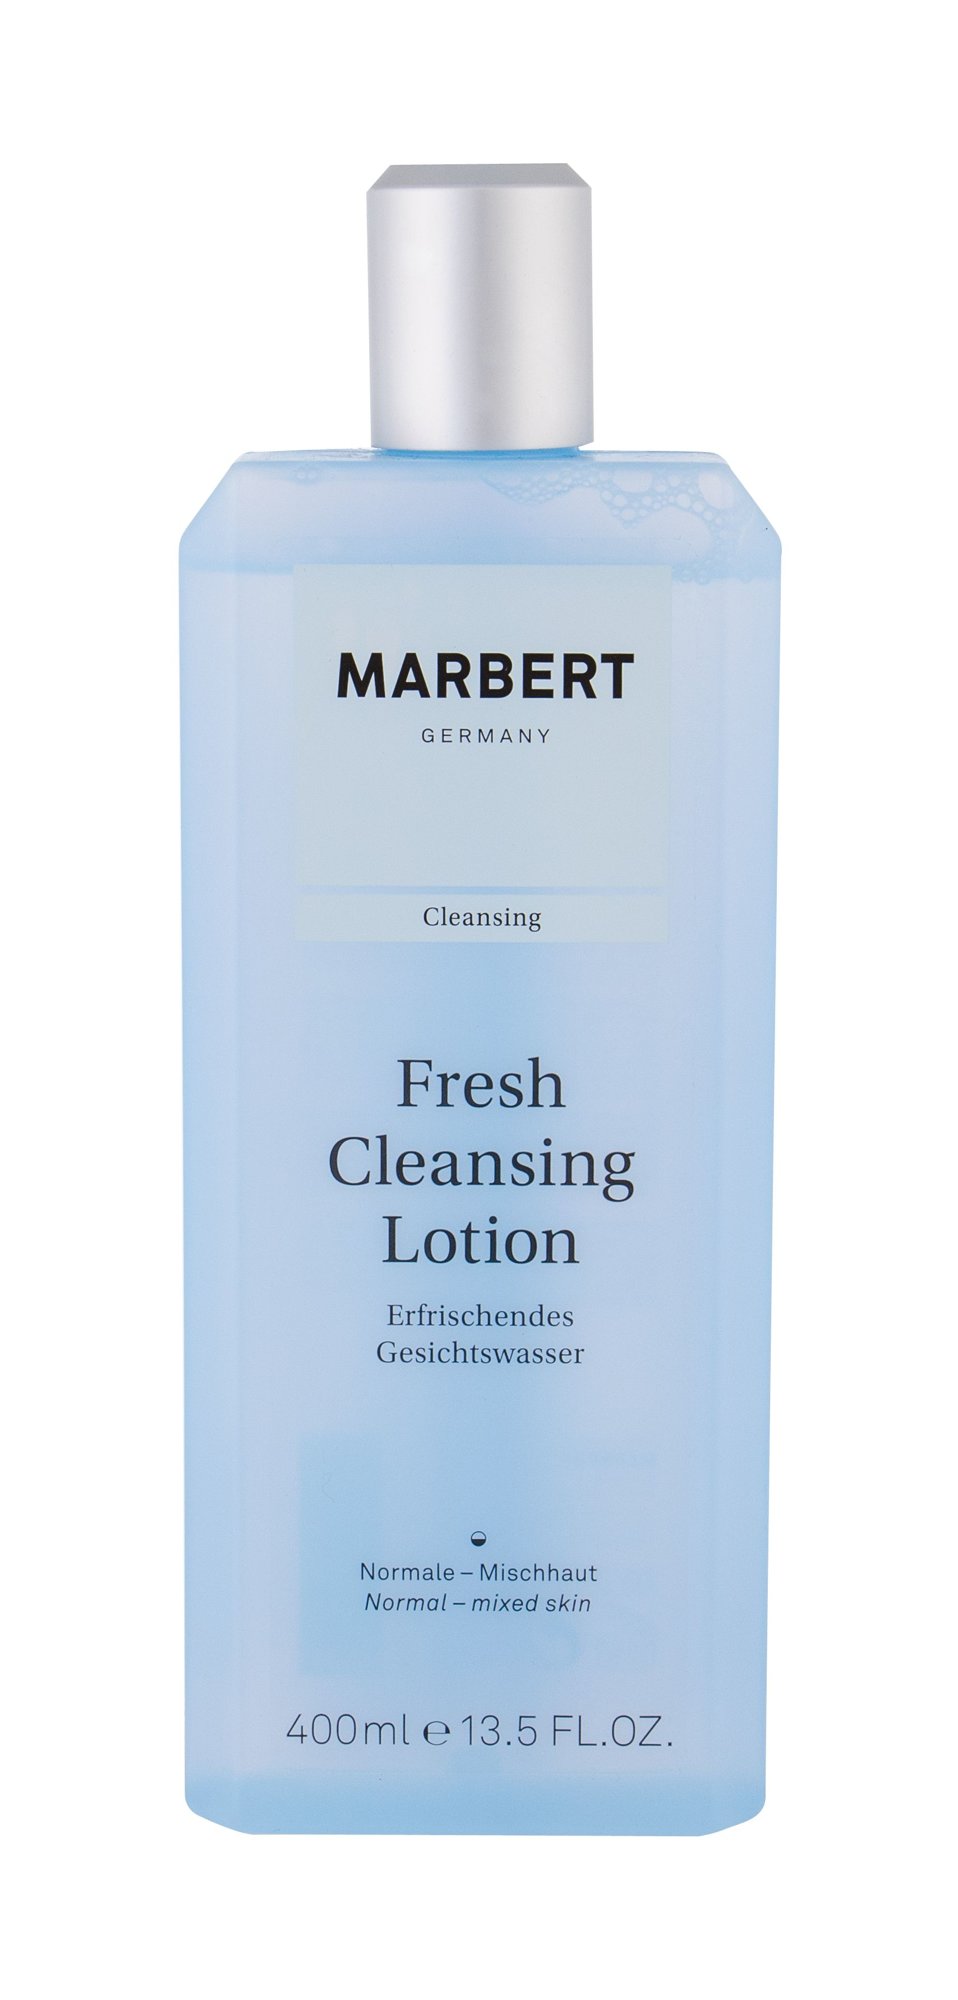 Marbert Cleansing